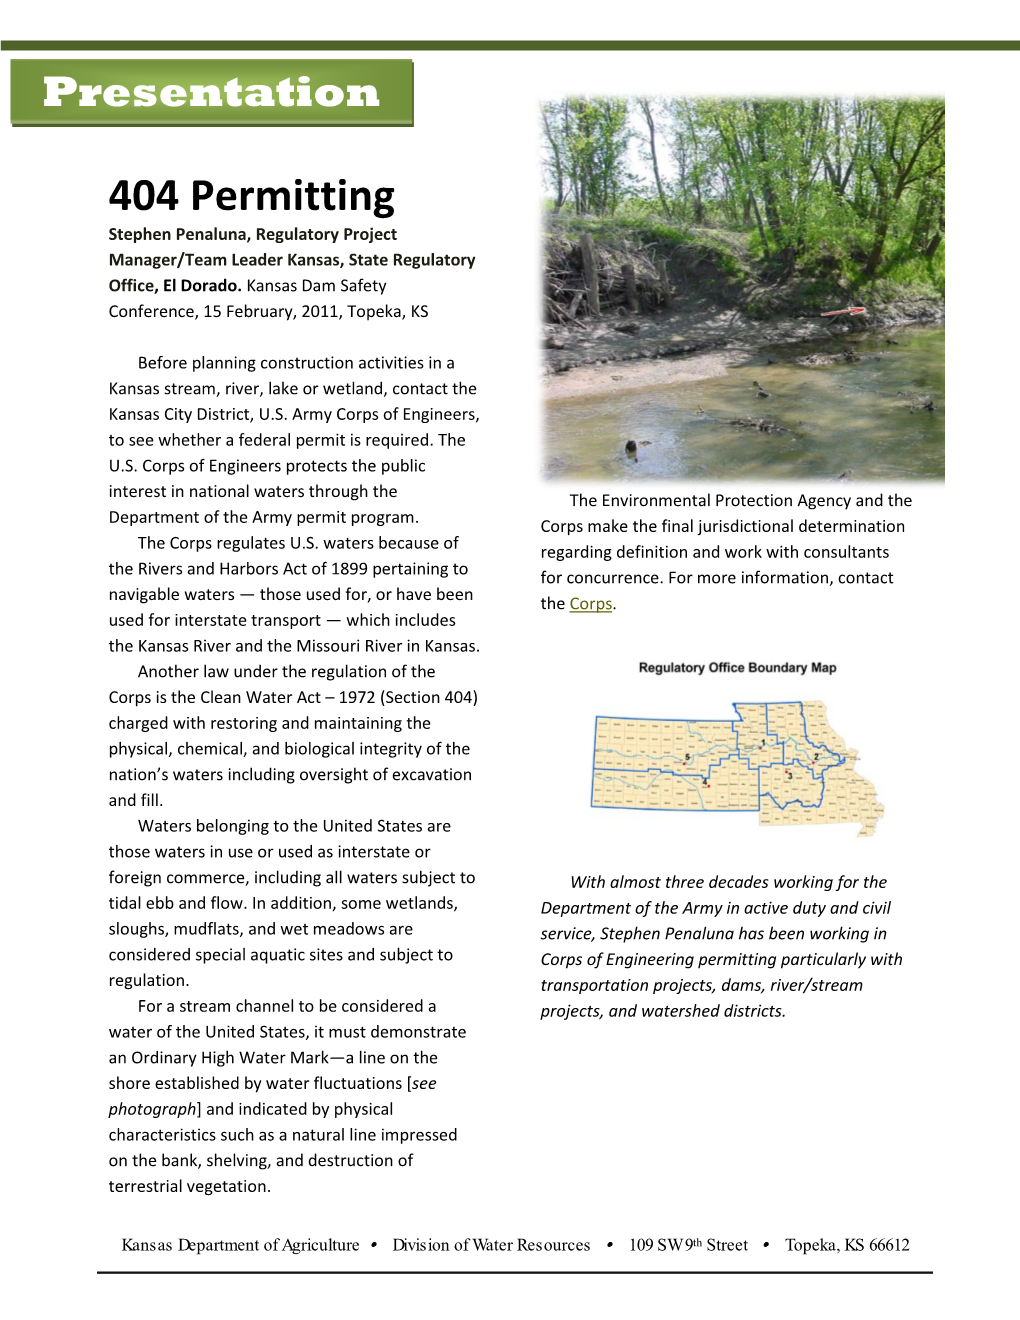 404 Permitting Stephen Penaluna, Regulatory Project Manager/Team Leader Kansas, State Regulatory Office, El Dorado